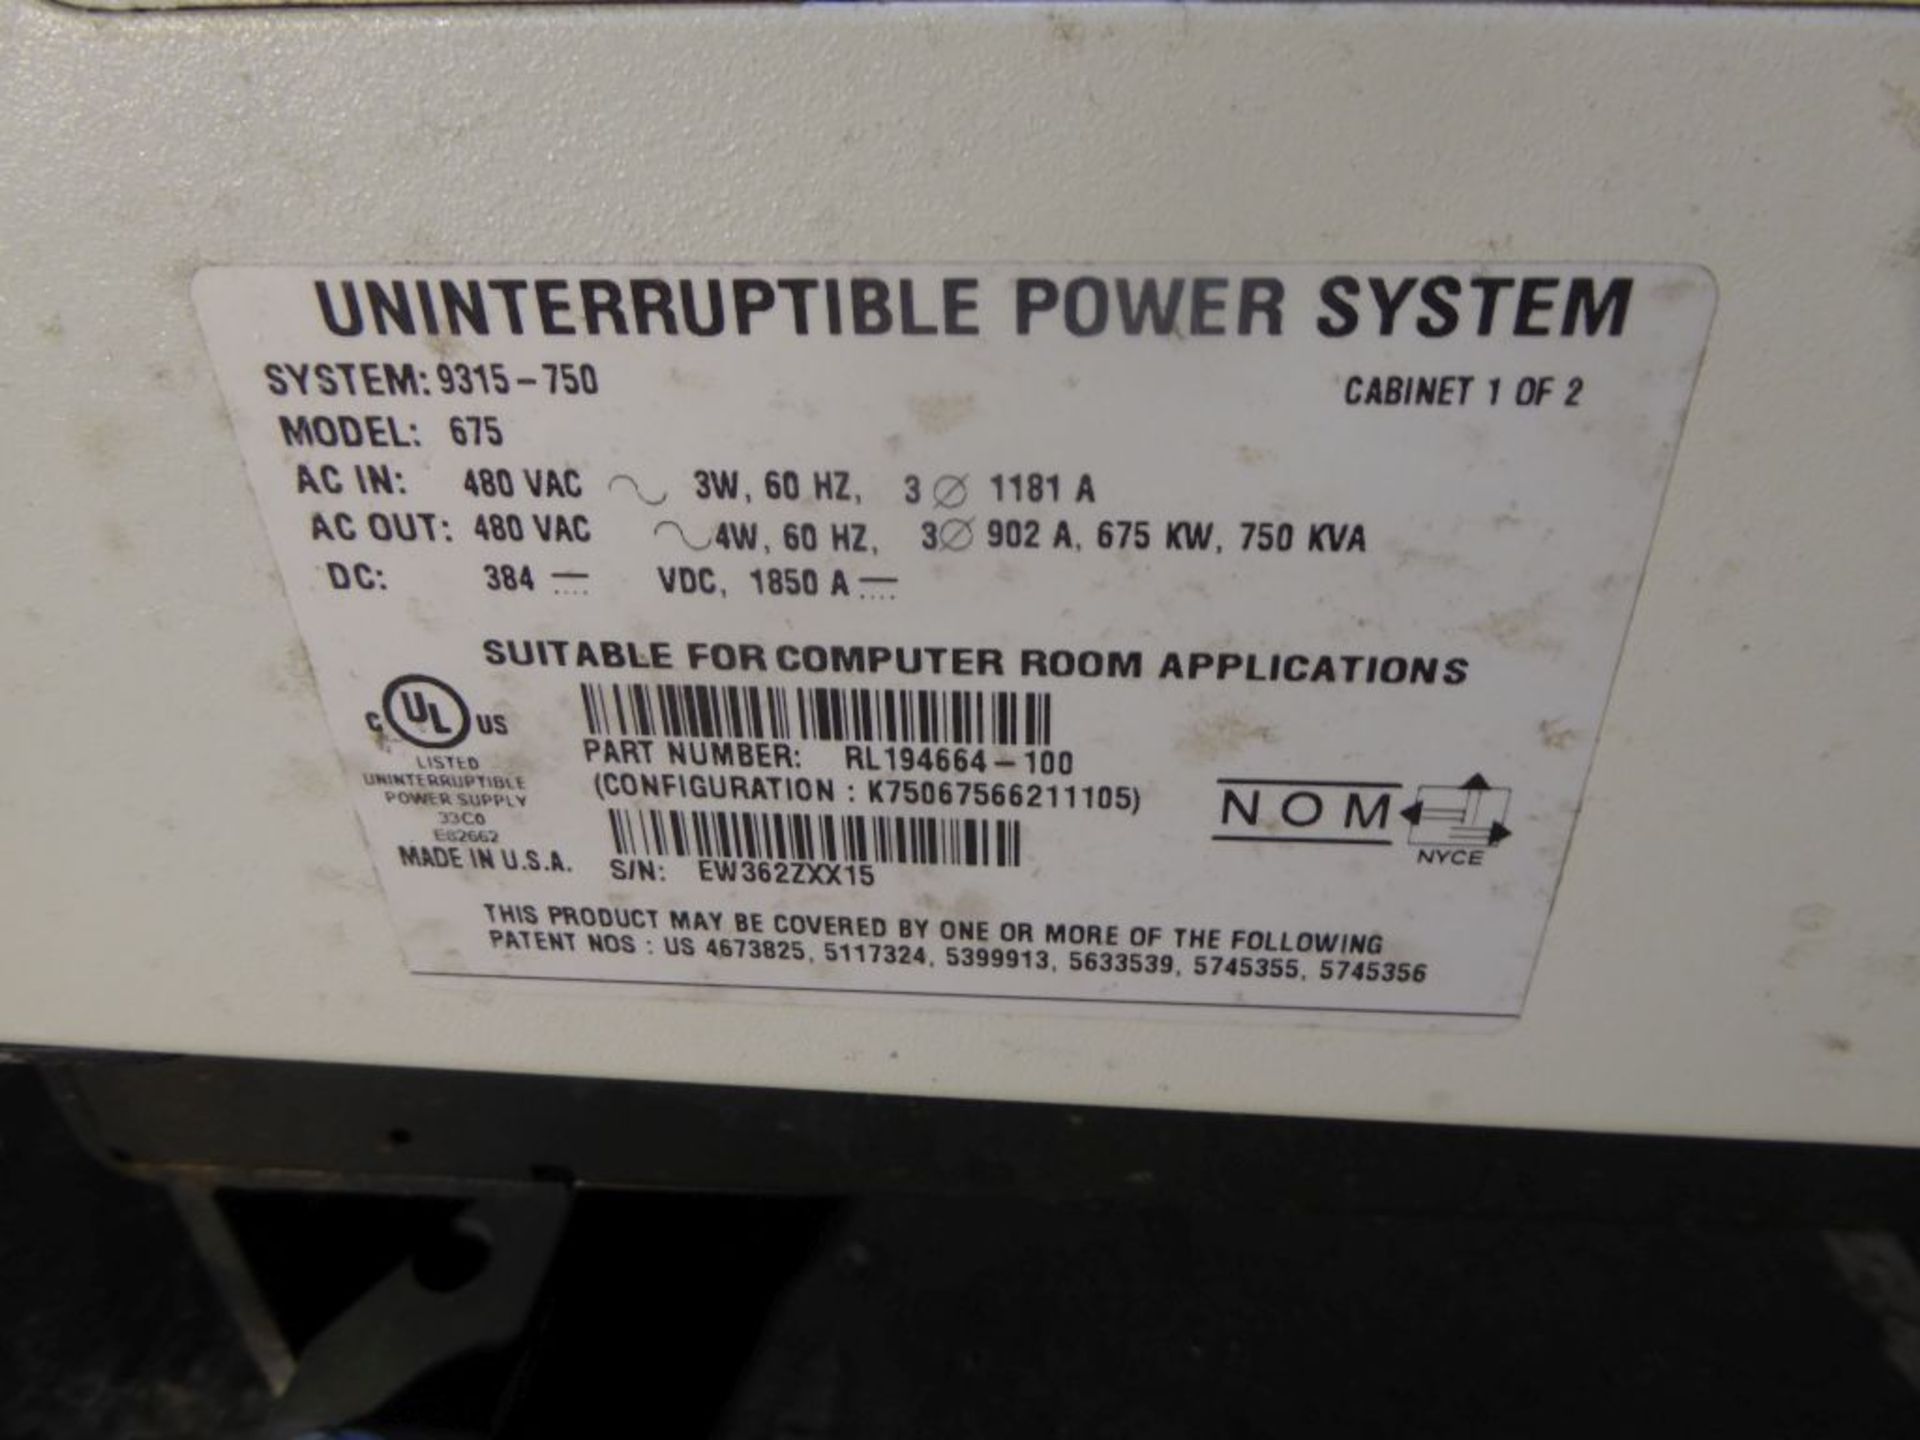 Charlotte, NC - Eaton Uninterruptible Power System - Image 2 of 2